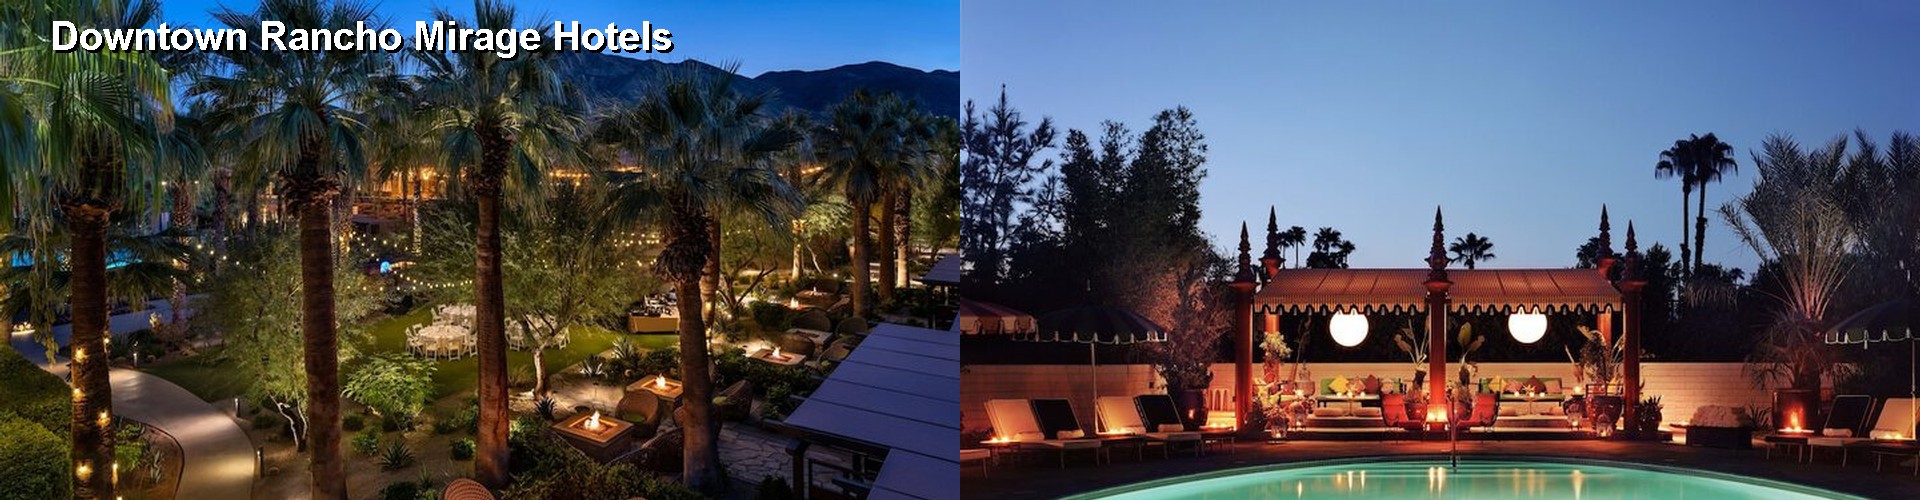 5 Best Hotels near Downtown Rancho Mirage